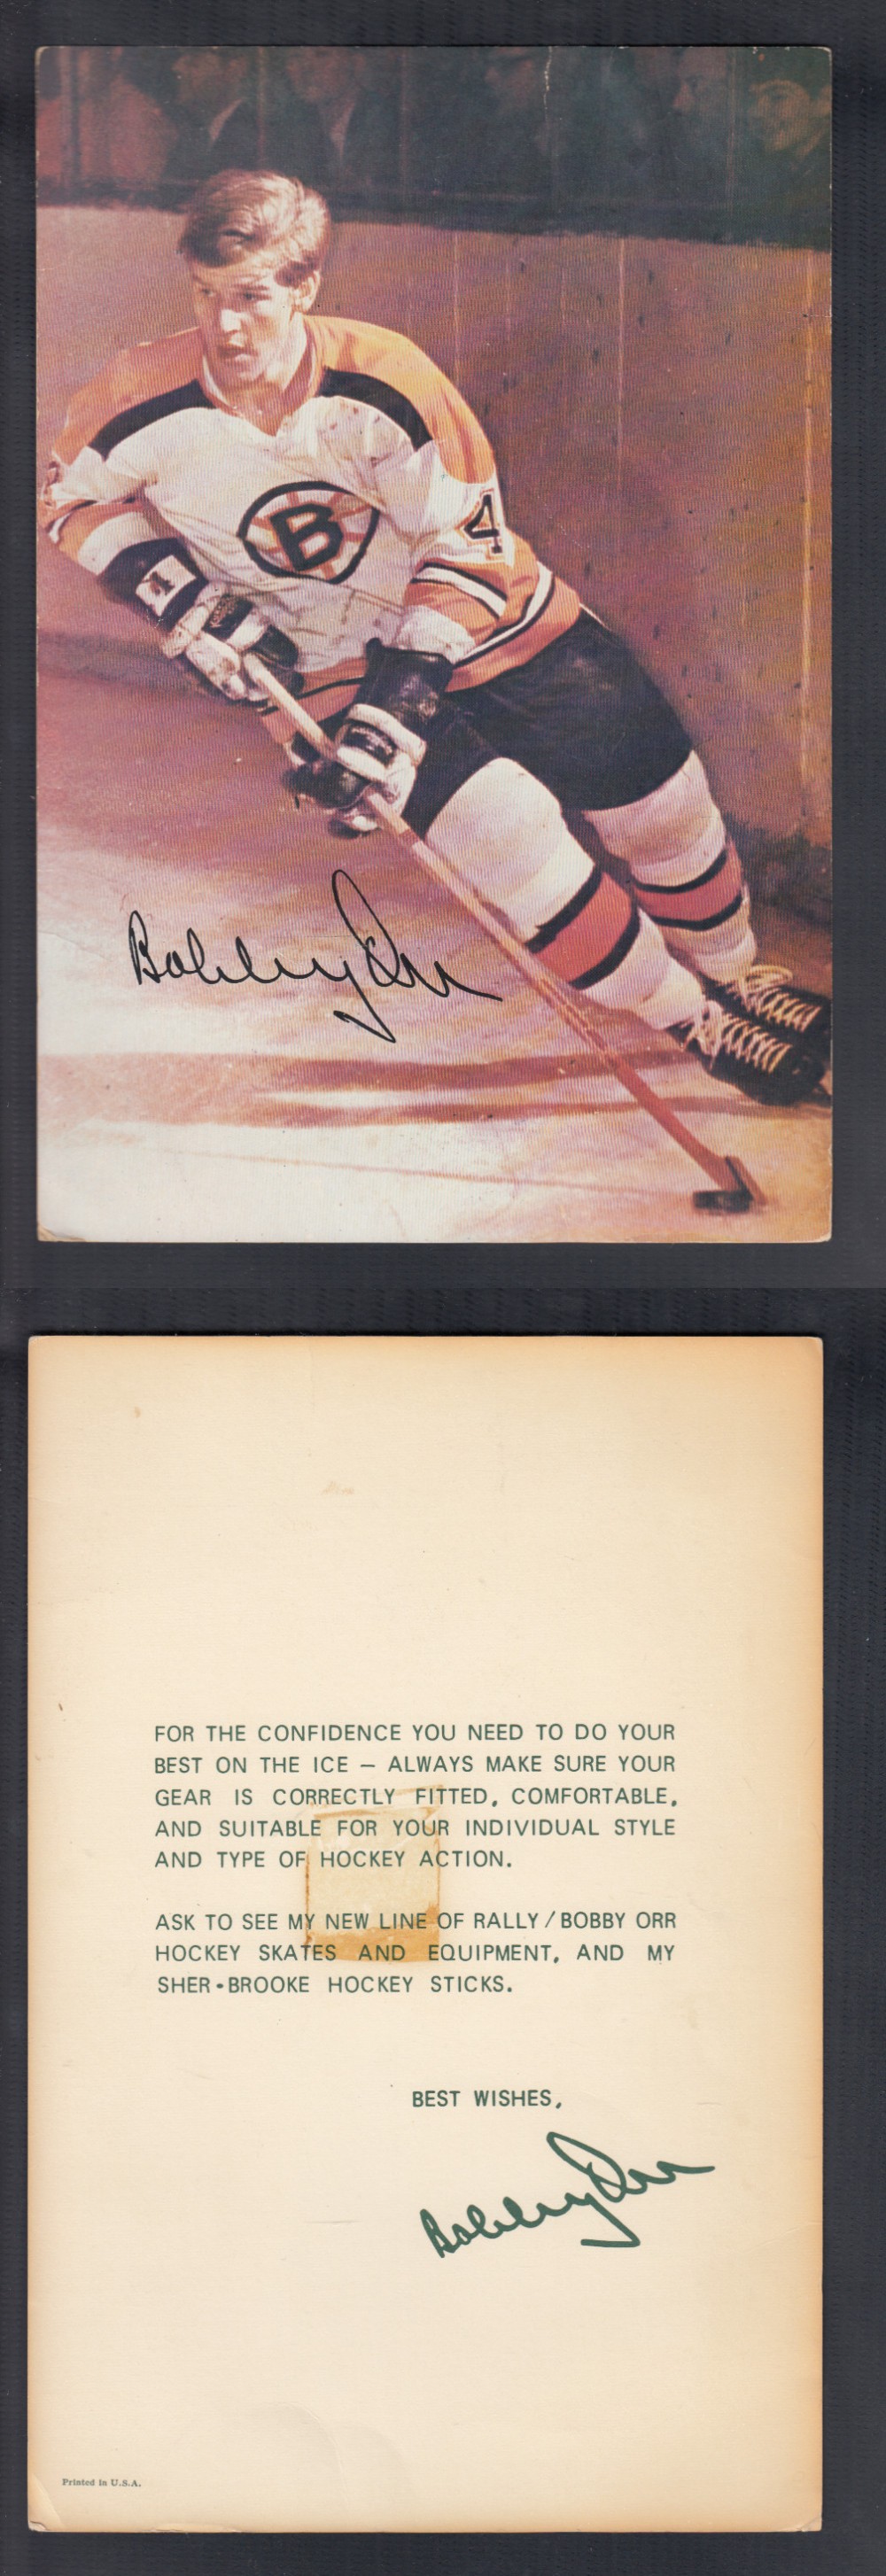 1969-70 RALLY SHERWOOD BOBBY ORR PROMO CARD photo